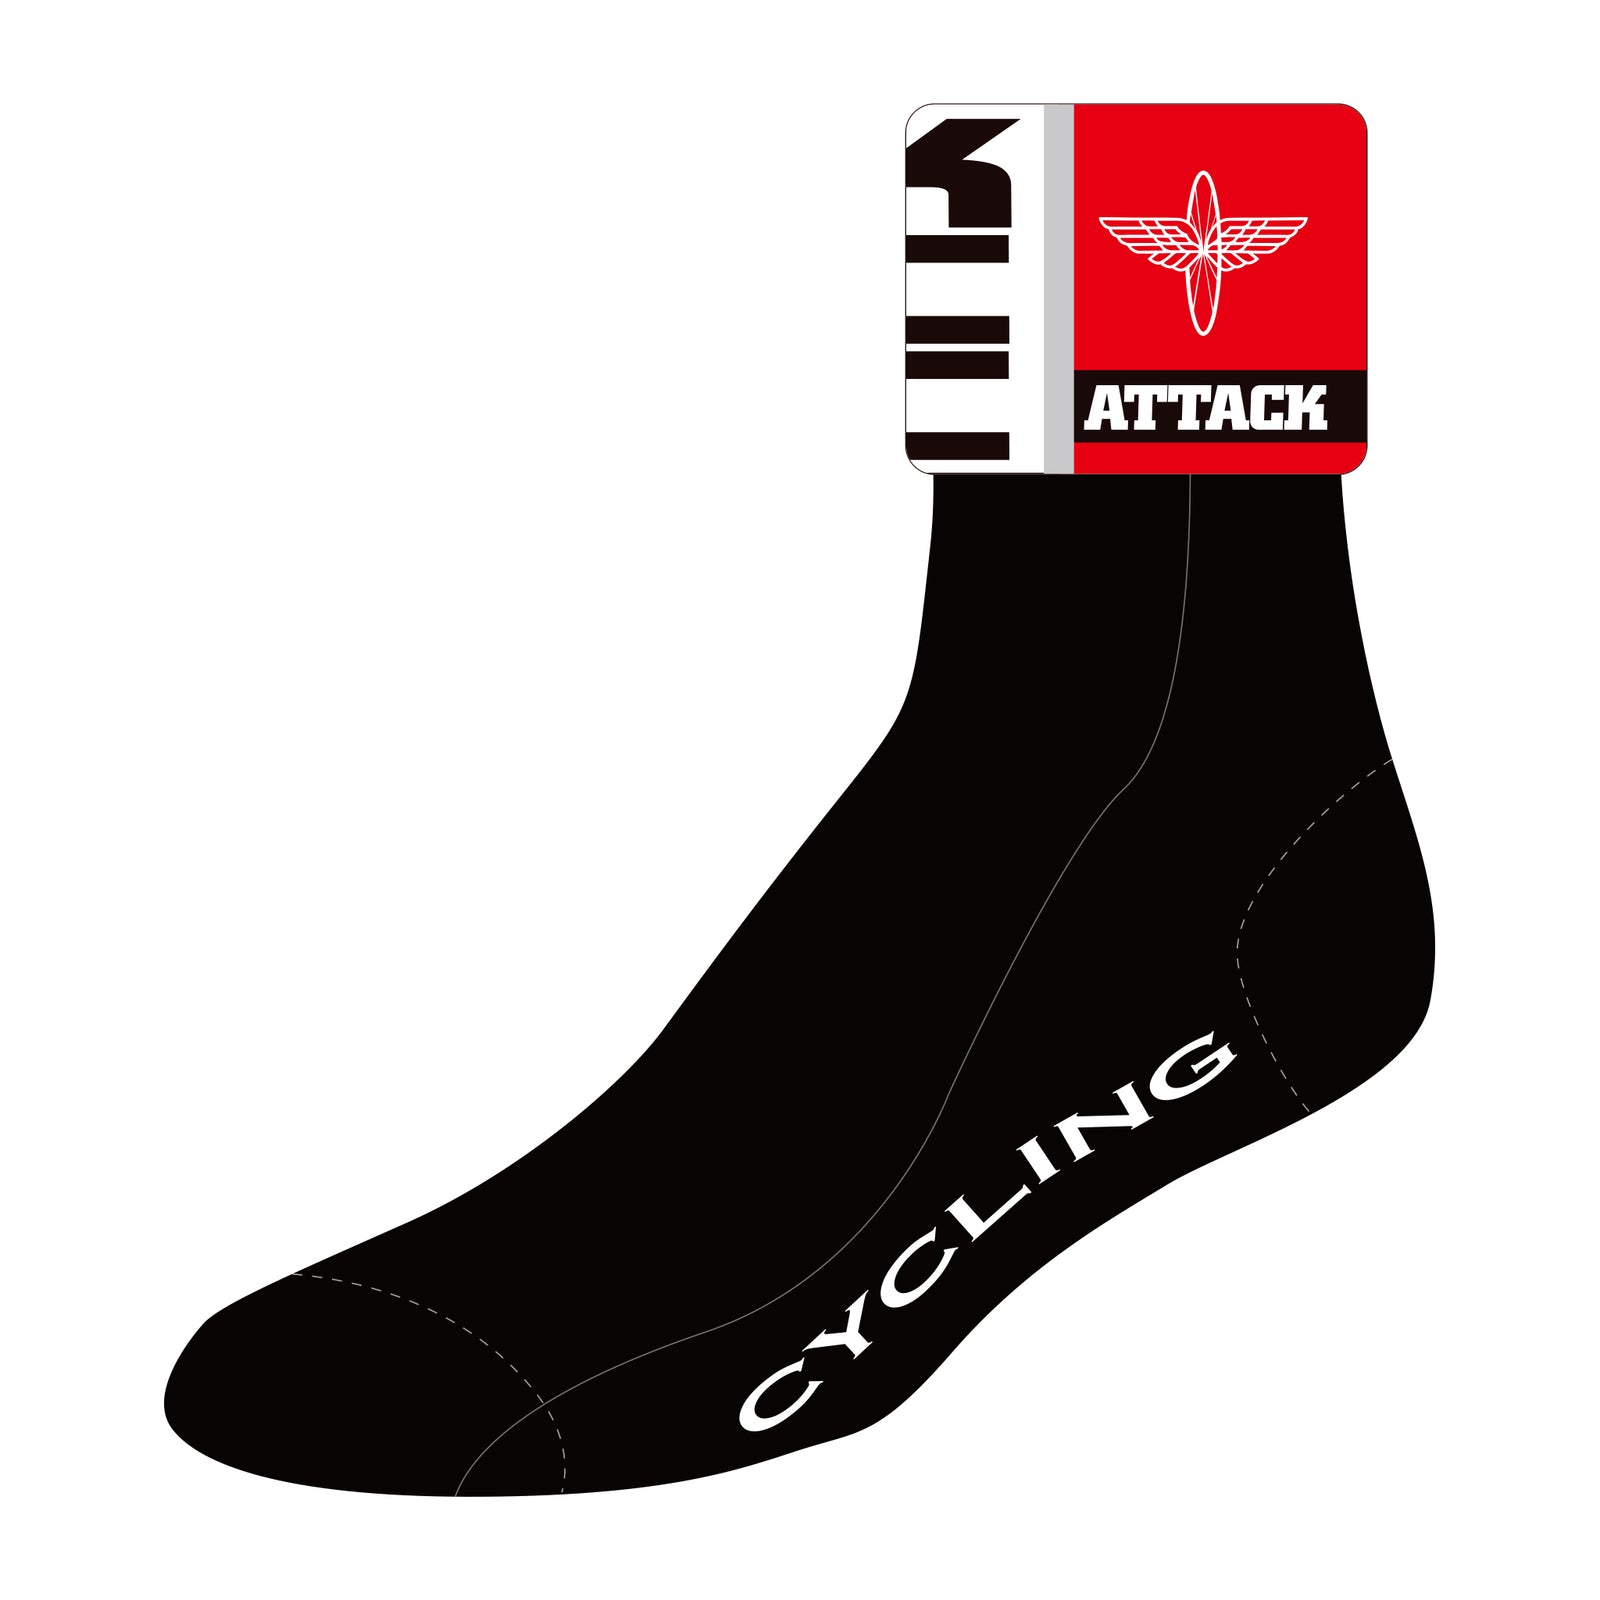 Kilkenny SILVER Cycling Socks, Track Attack Design